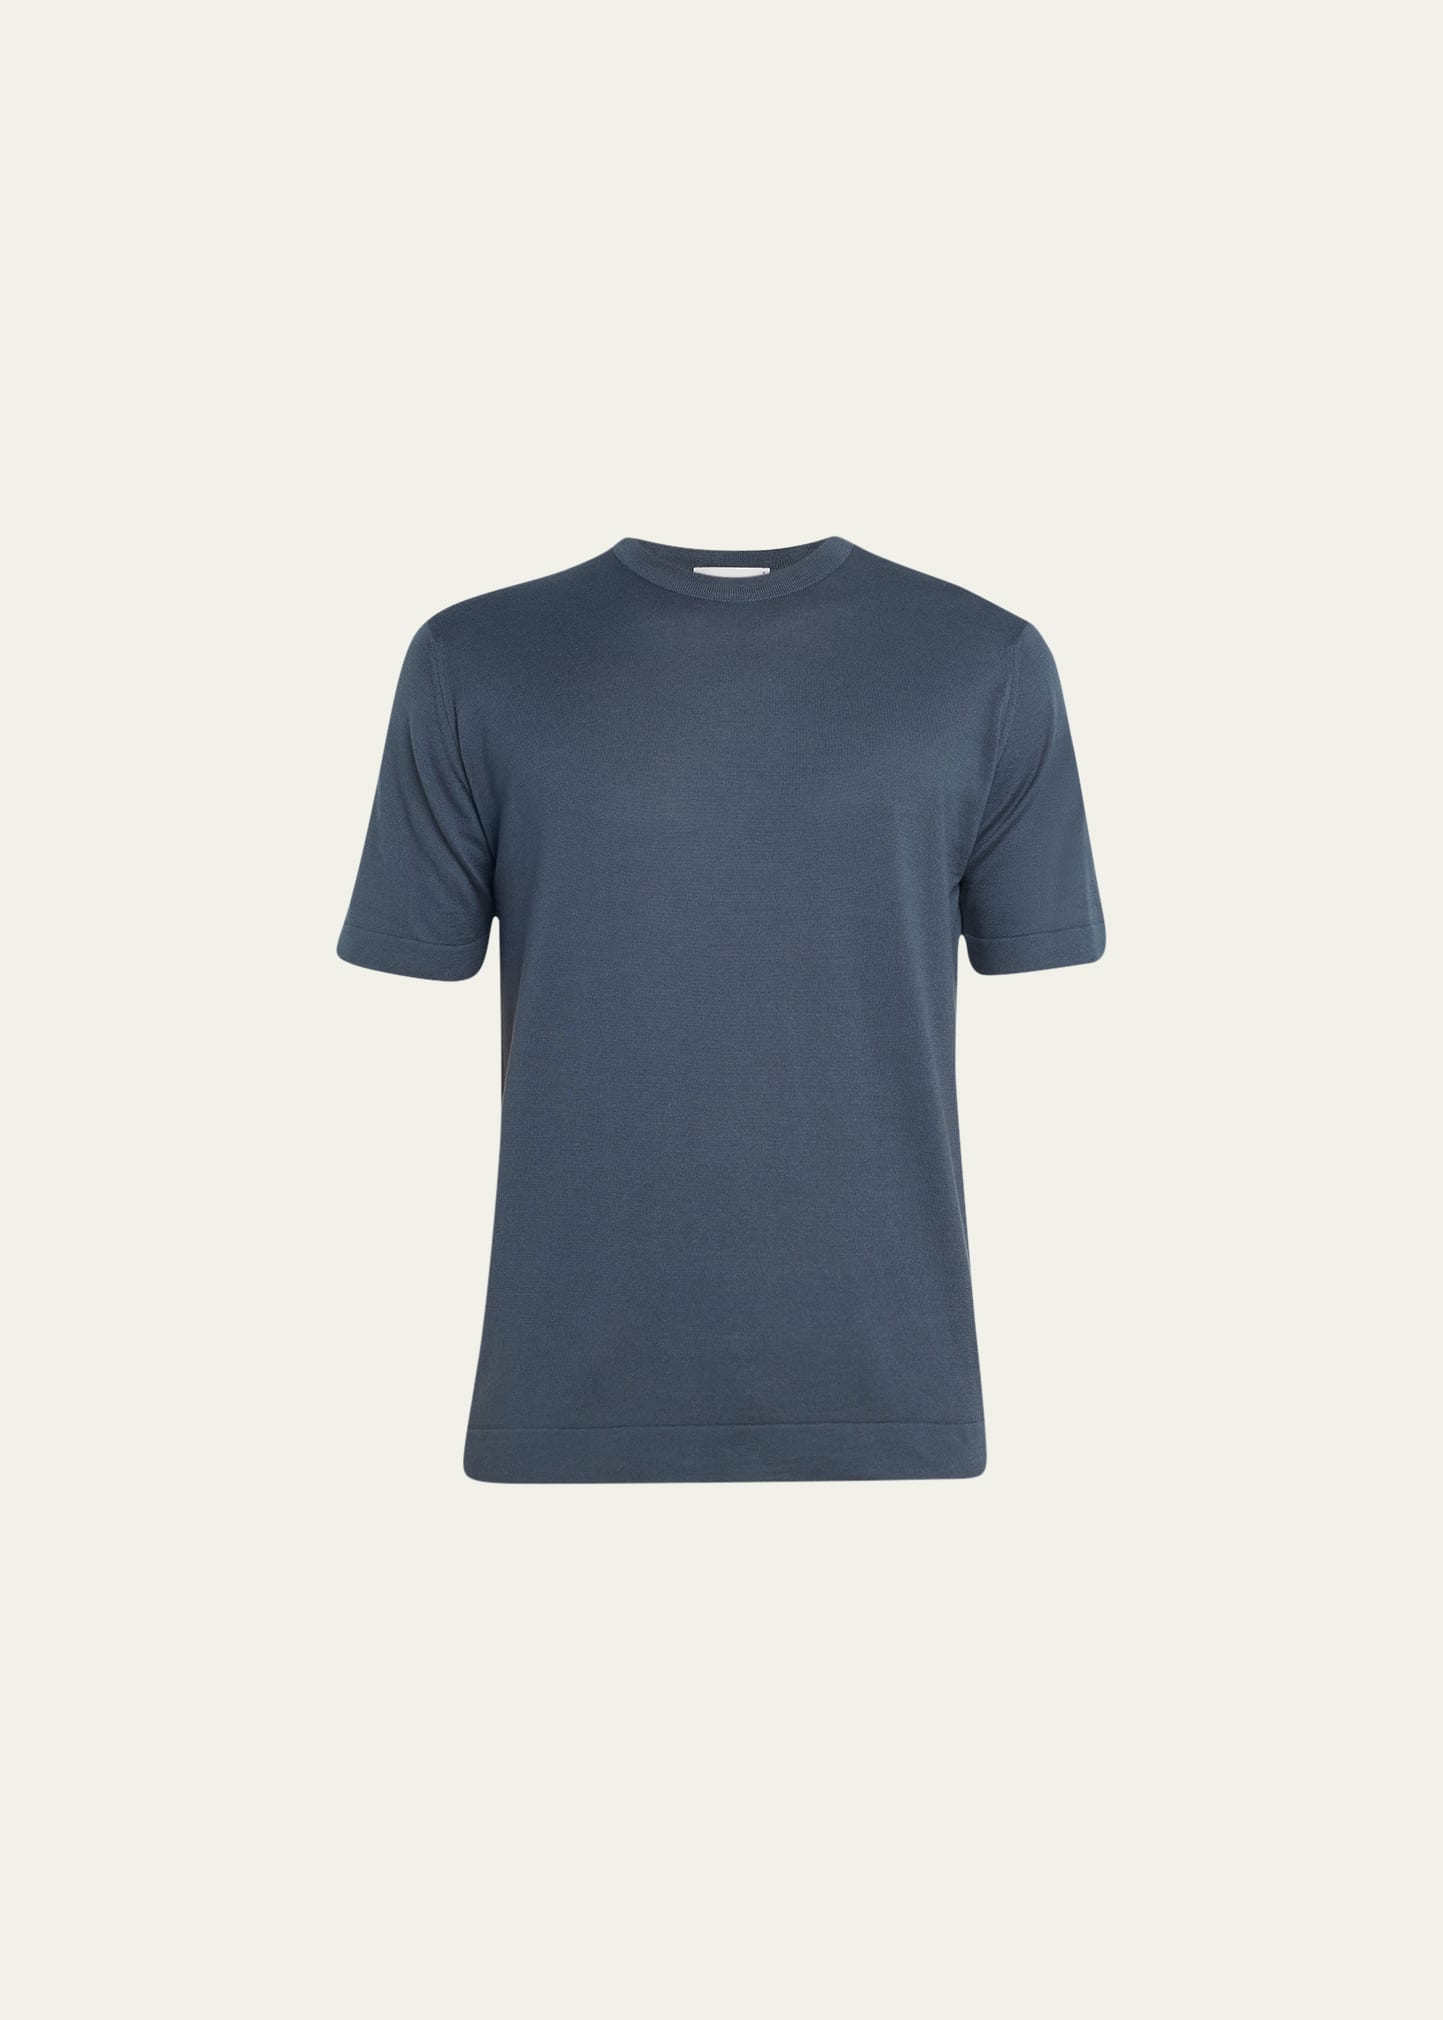 John Smedley Men's Lorca Sea Island Cotton T-shirt In Granite